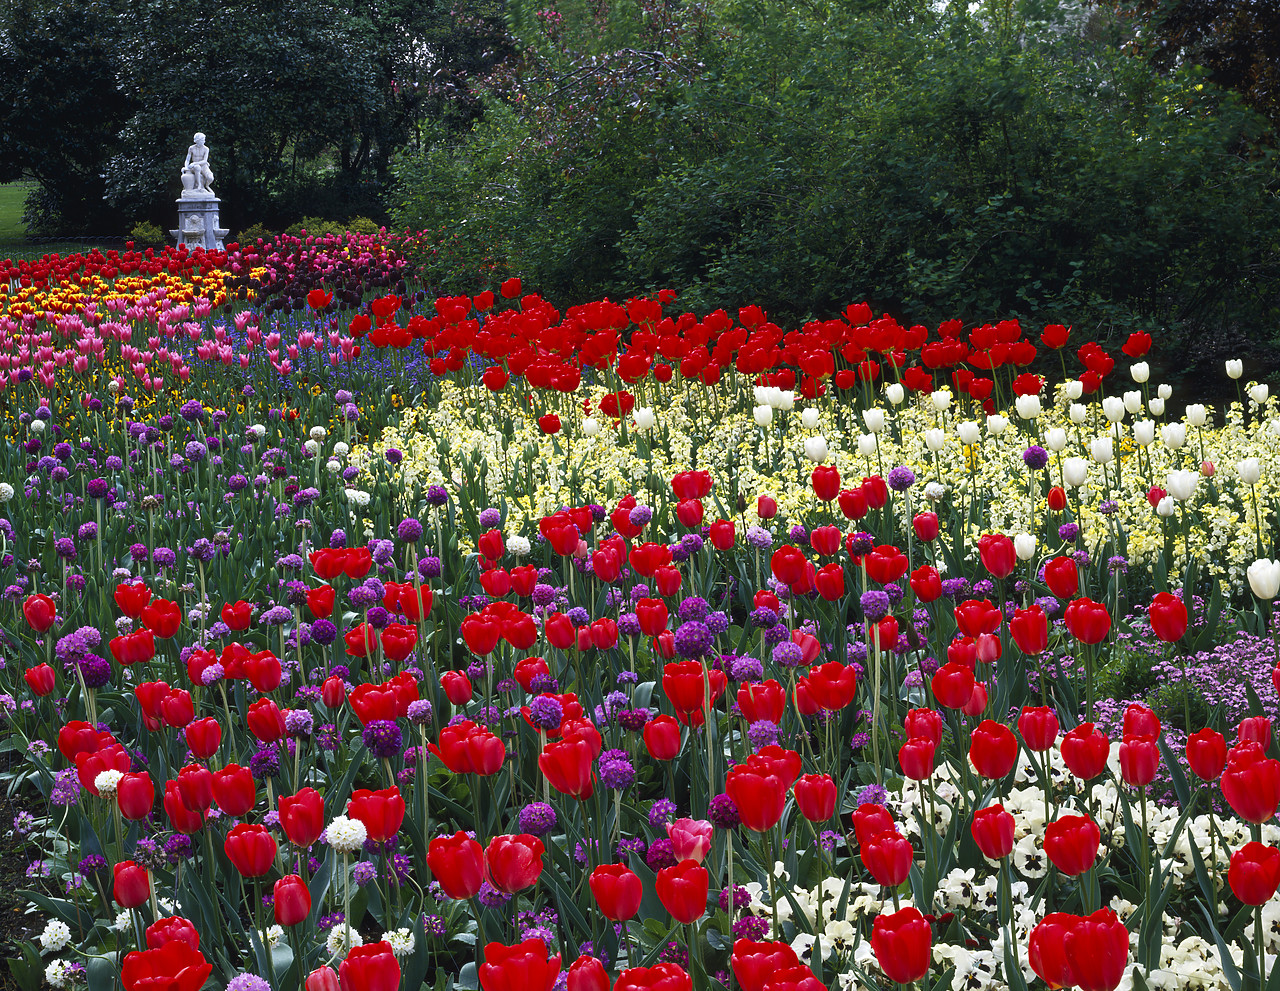 #944556-1 - Tulip Garden, St. Jame's Park, London, England